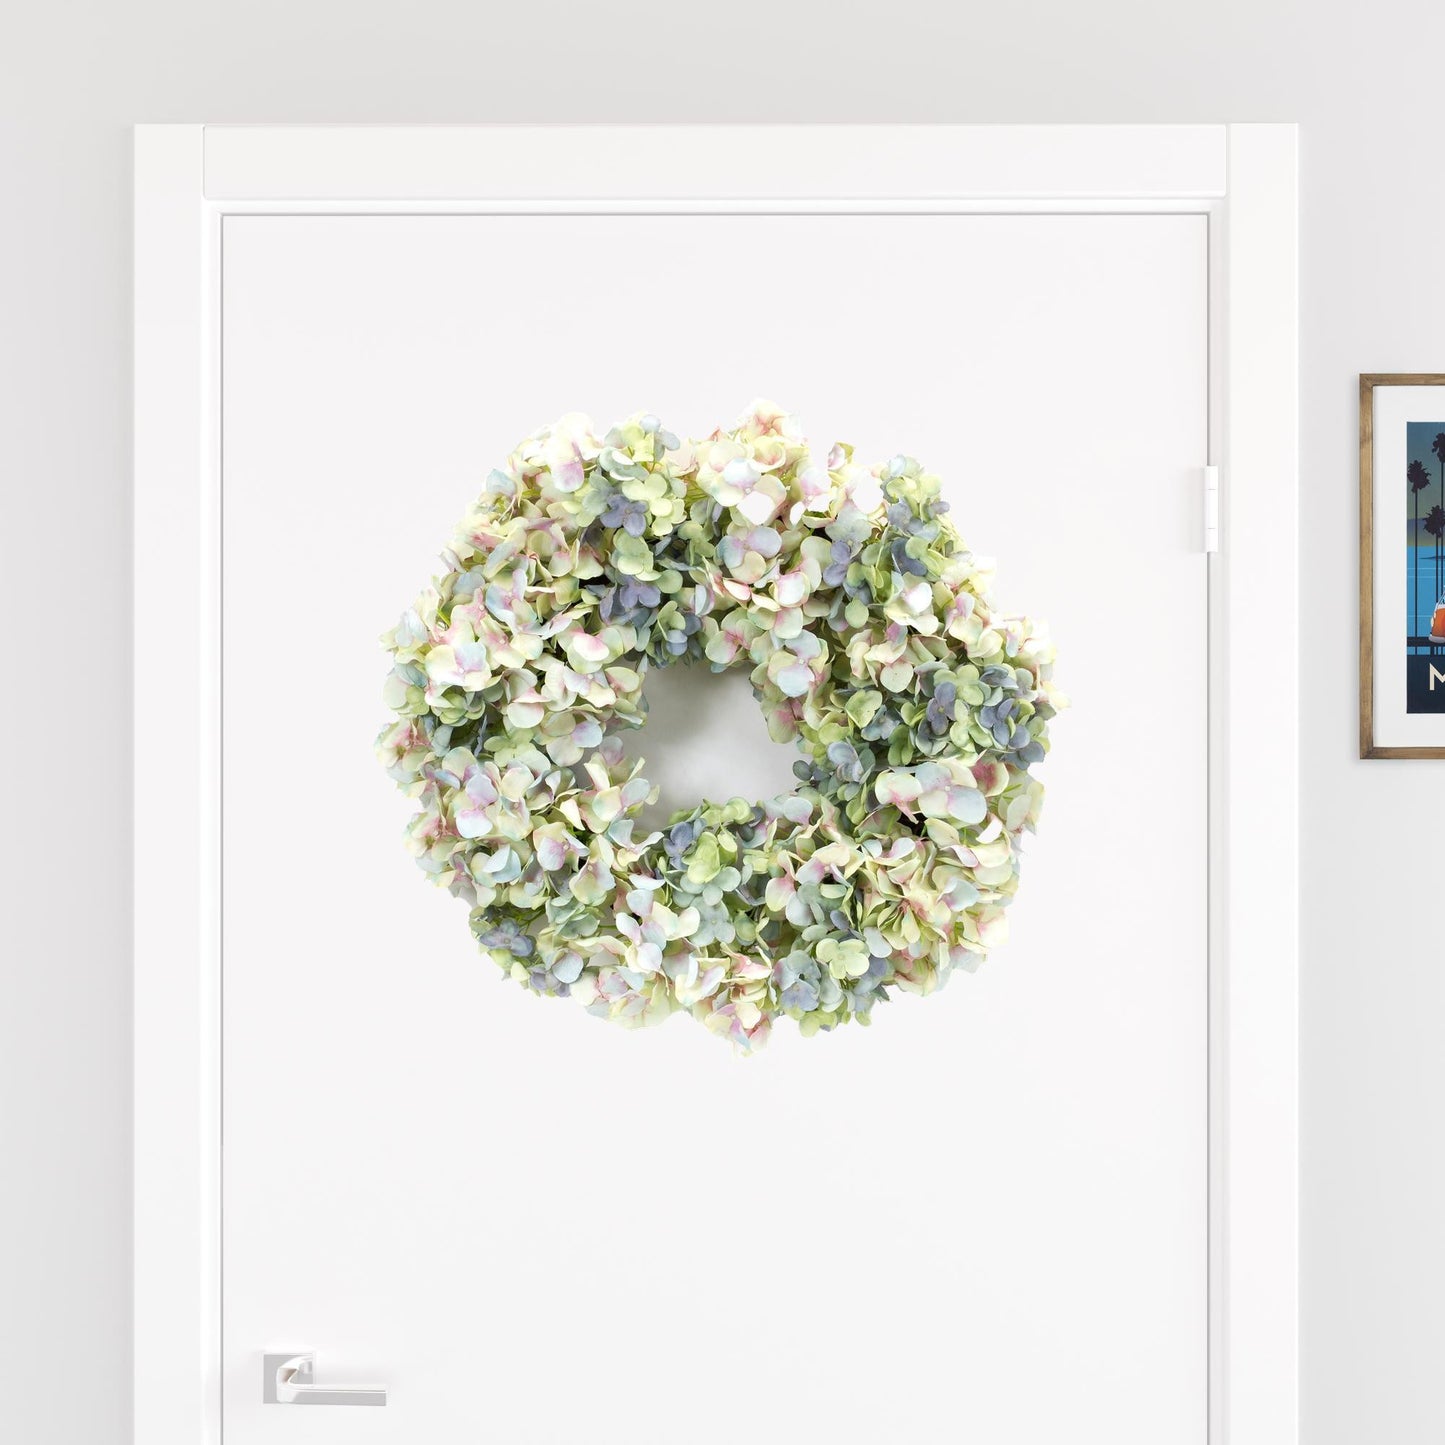 23" Green and White Artificial Hydrangea Wreath